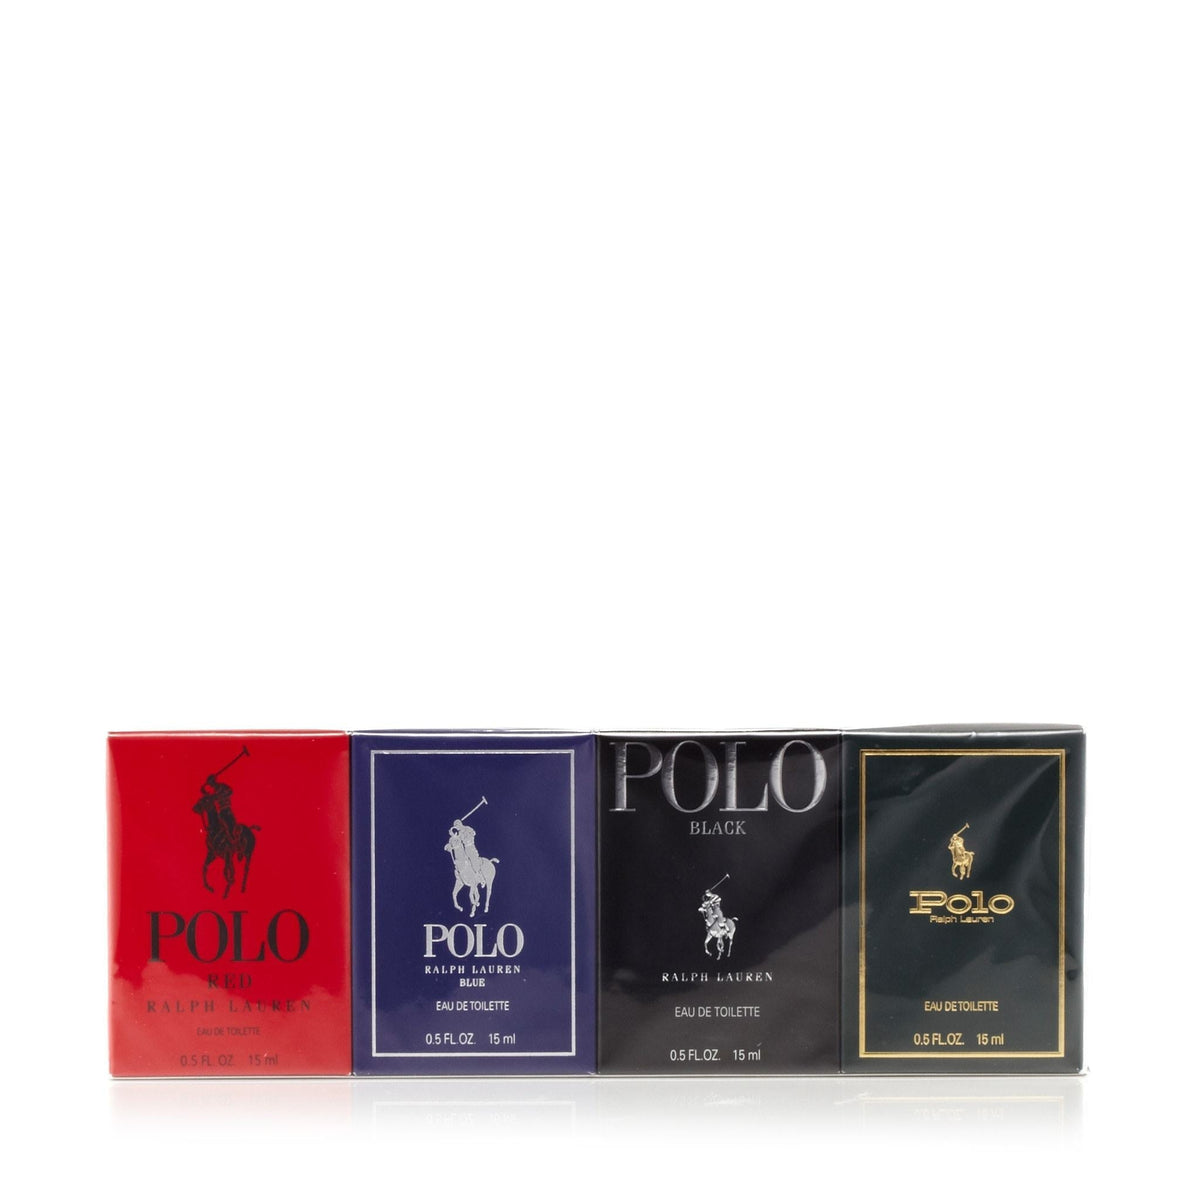 Polo Classic Miniatures for Men by Ralph Lauren